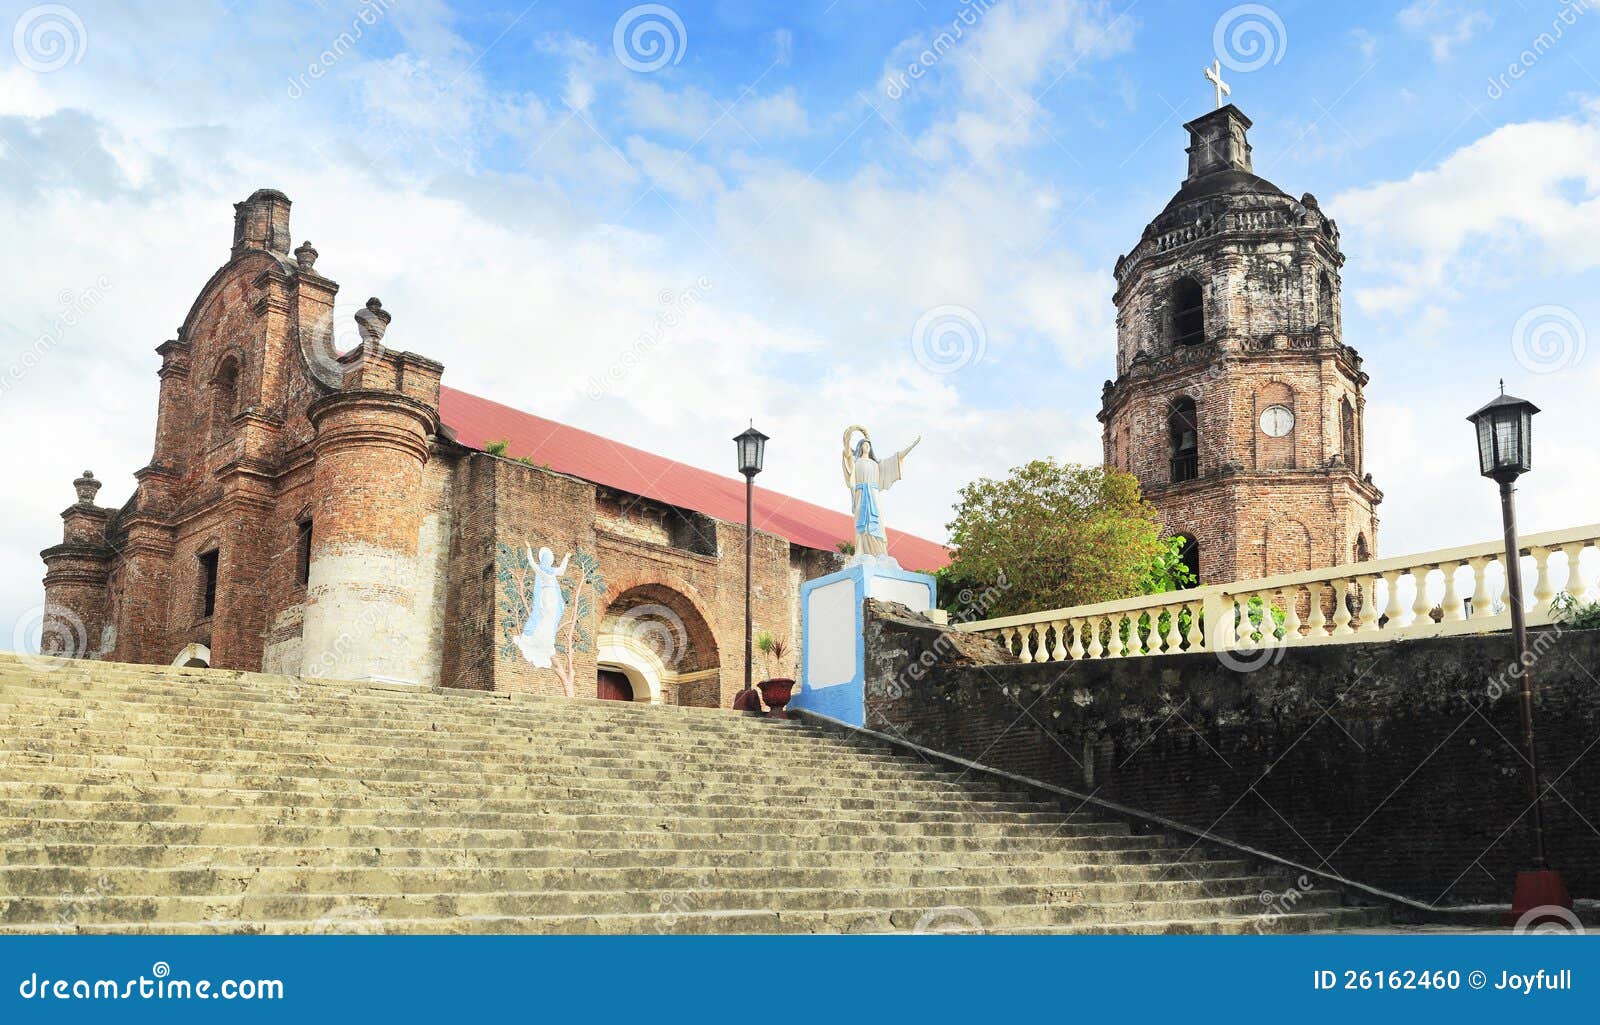 Santa Maria Church - UNESCO World Heritage Site in Santa Maria city, Illocos Sur, Luzon island, Philippines